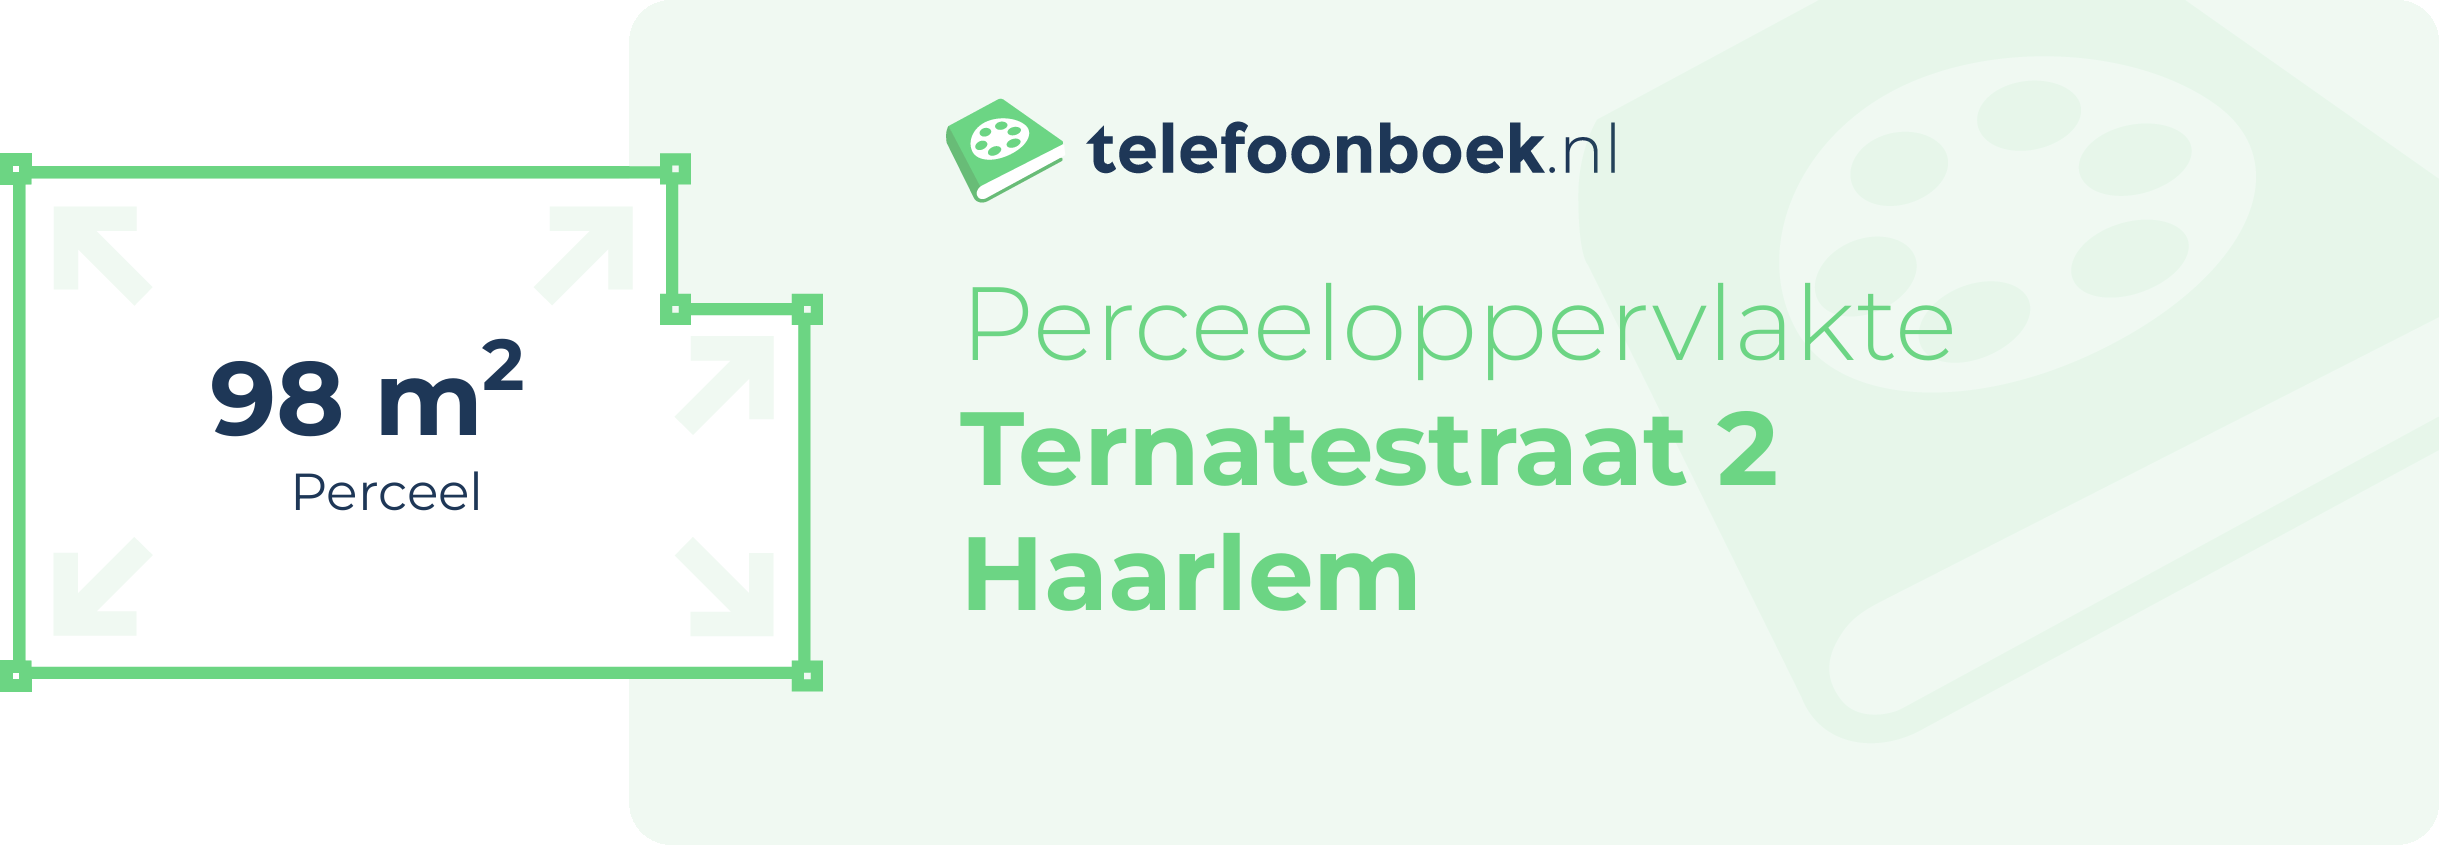 Perceeloppervlakte Ternatestraat 2 Haarlem